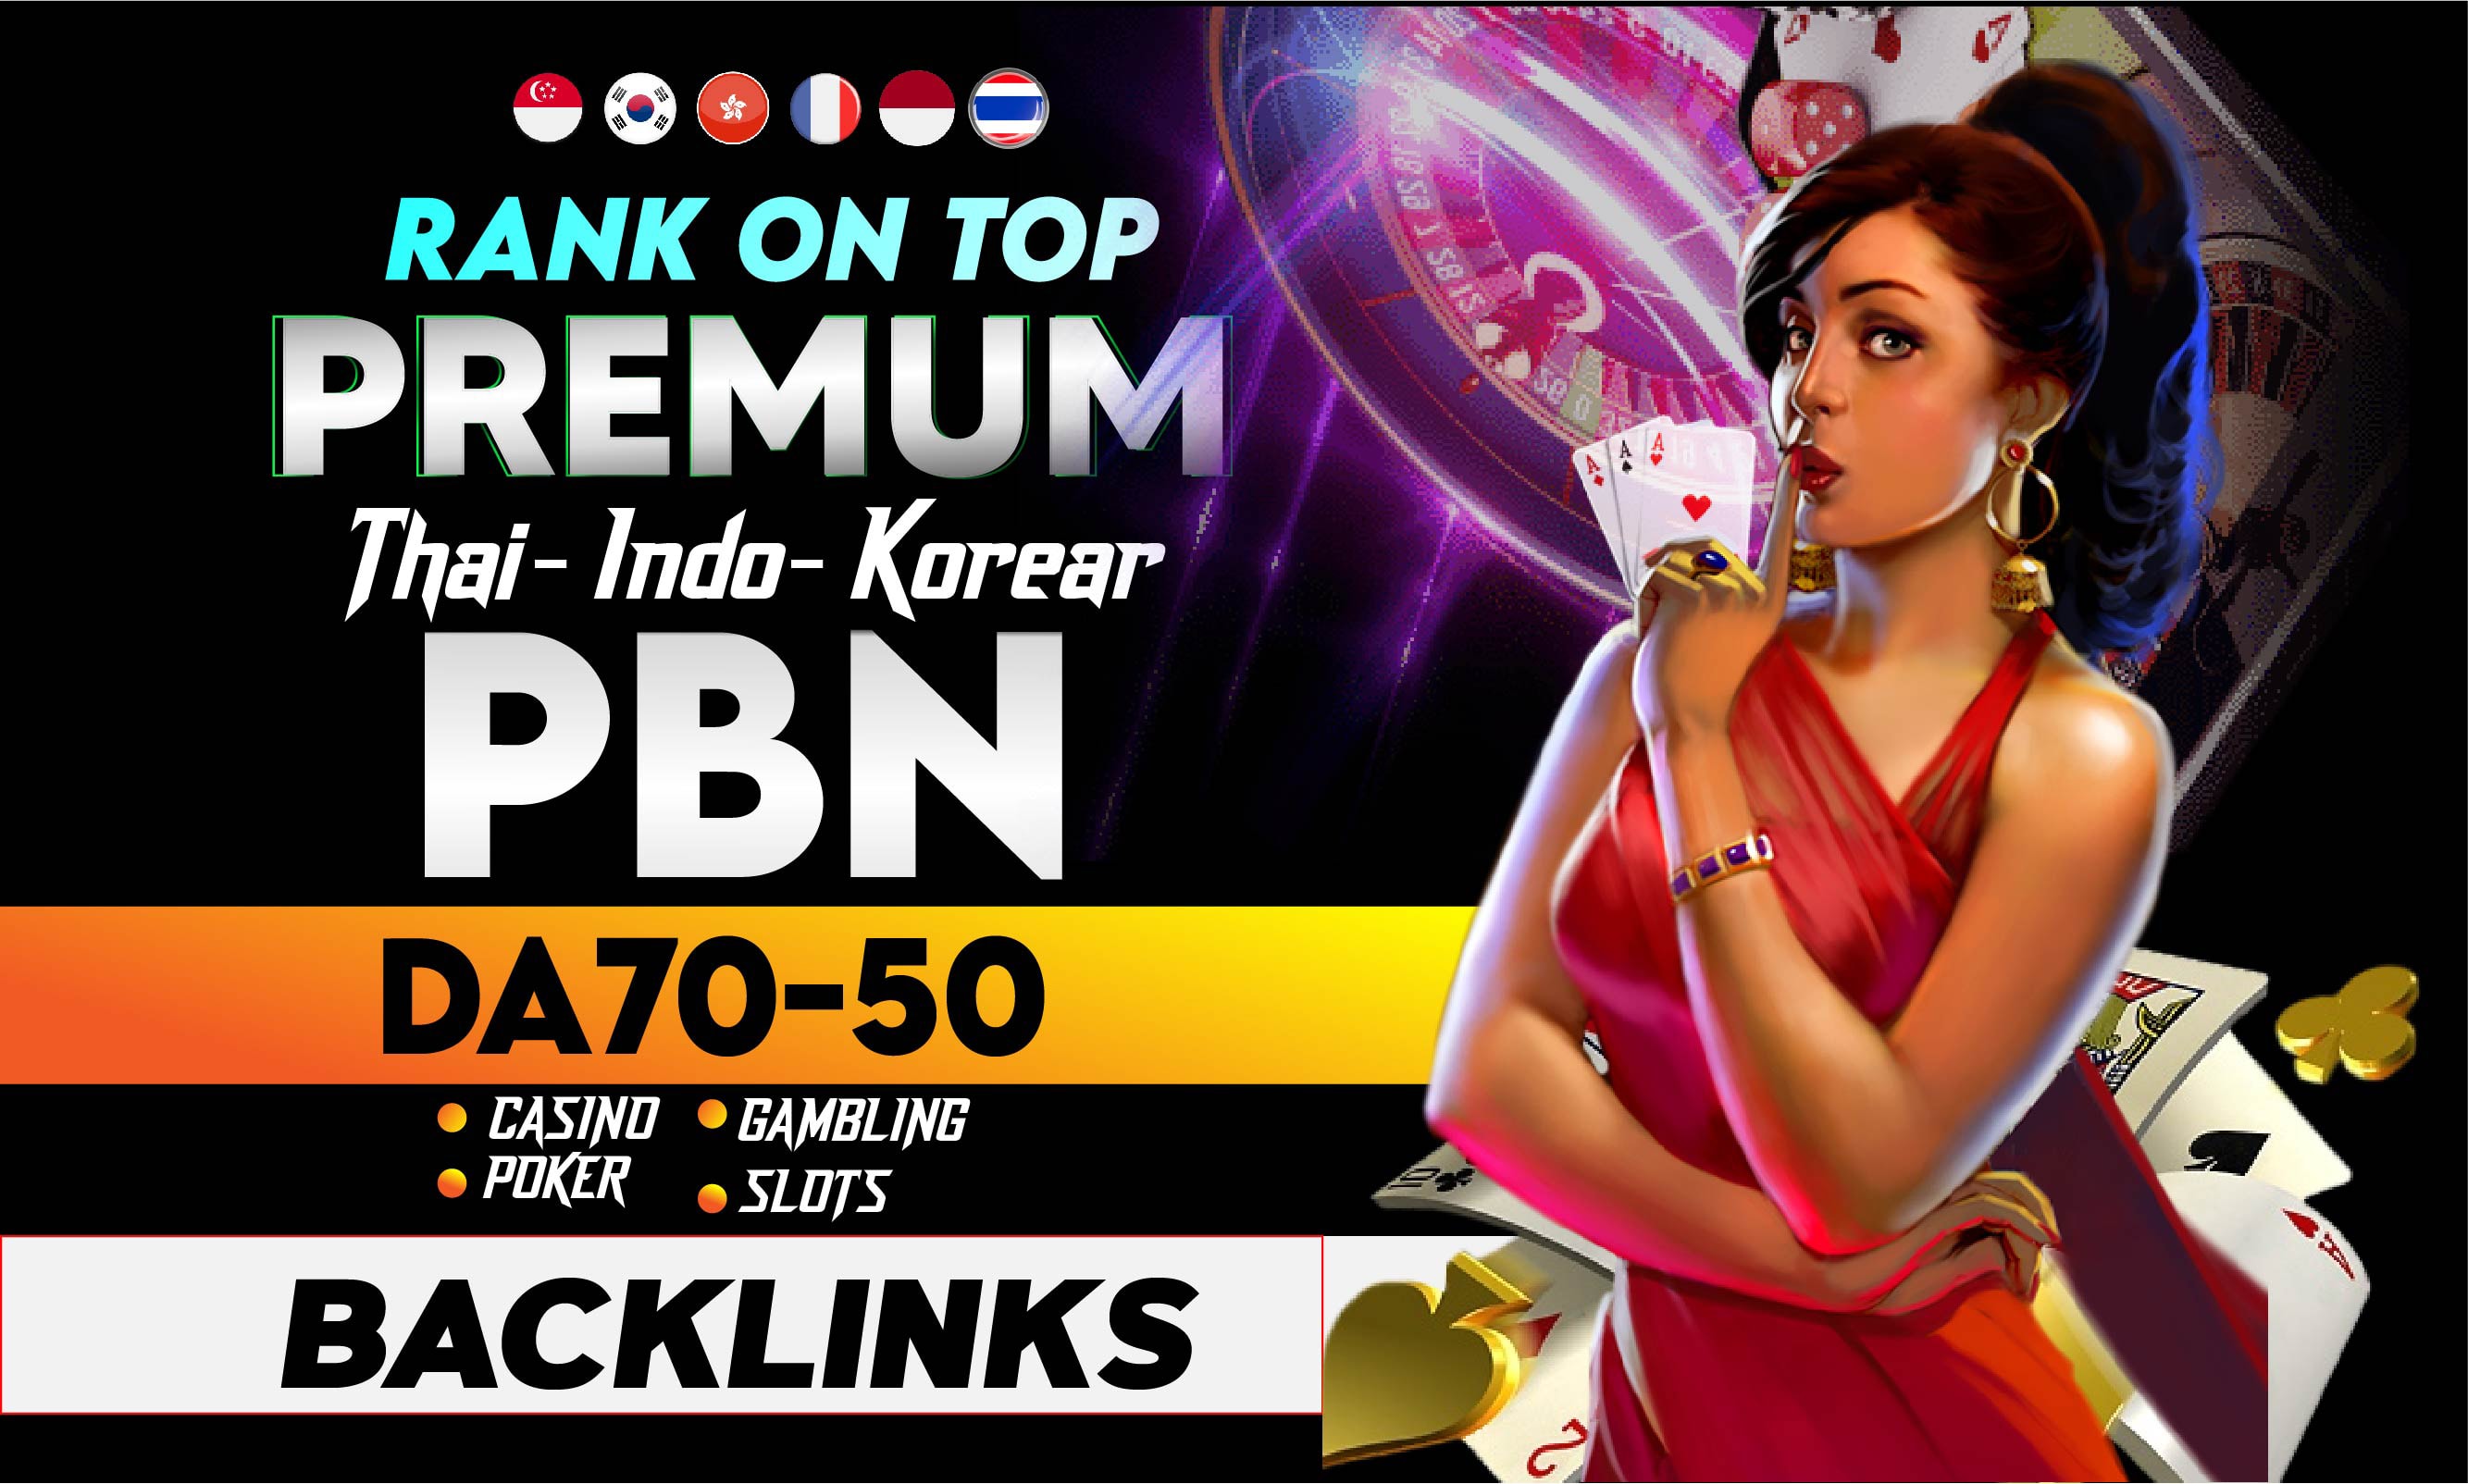 Rank On Top Thai- Indo- Korean 20 PBNs DA 70 - 50 Casino Gambling Backlinks 